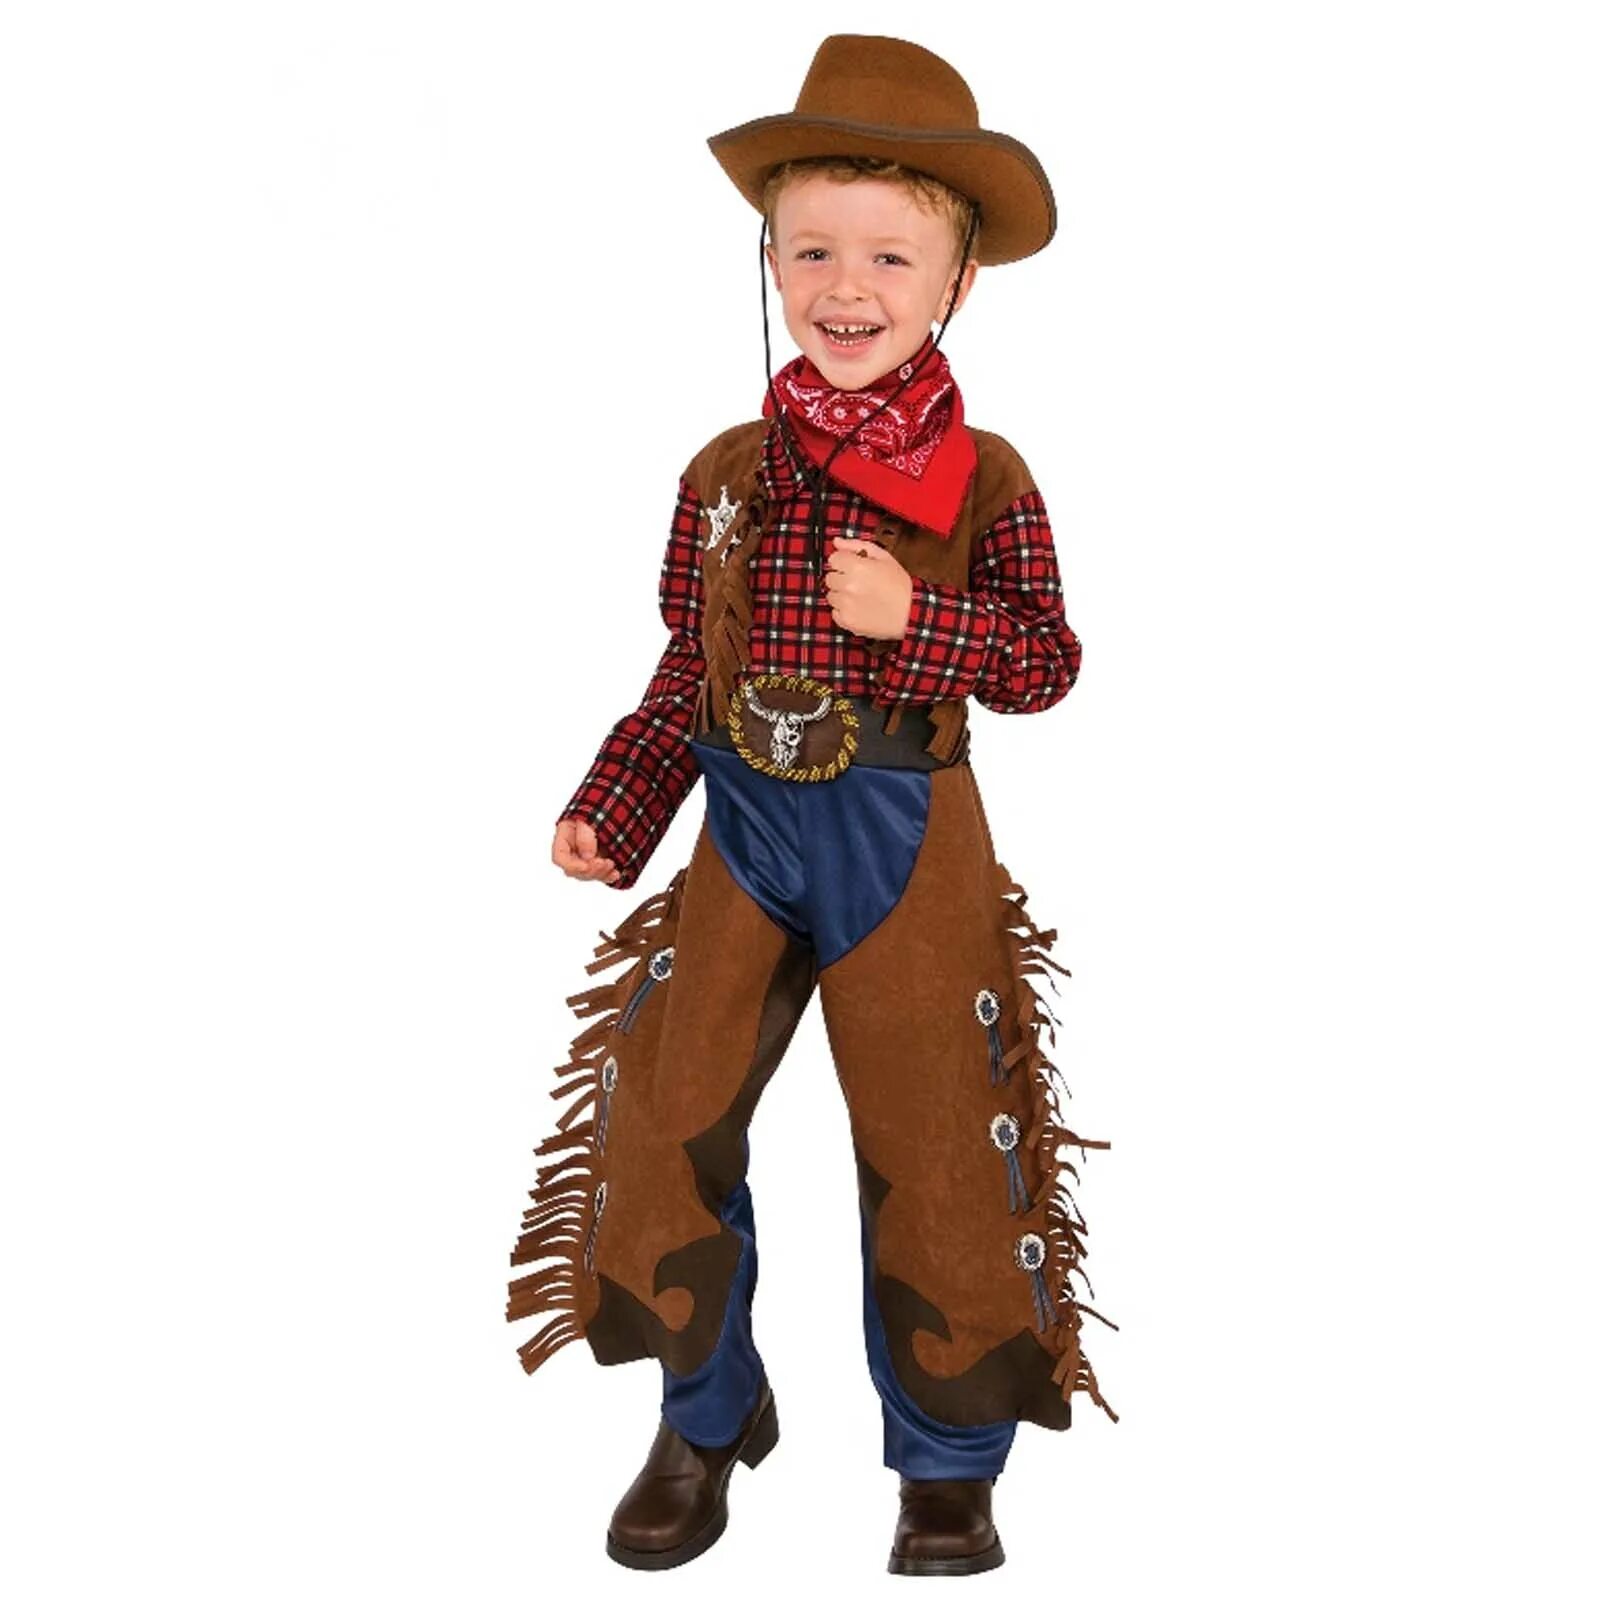 Костюм ковбоя. Карнавалия костюм ковбоя. Детский костюм "ковбой". Ковбойский наряд для мальчика. Новогодний костюм ковбоя для мальчика.